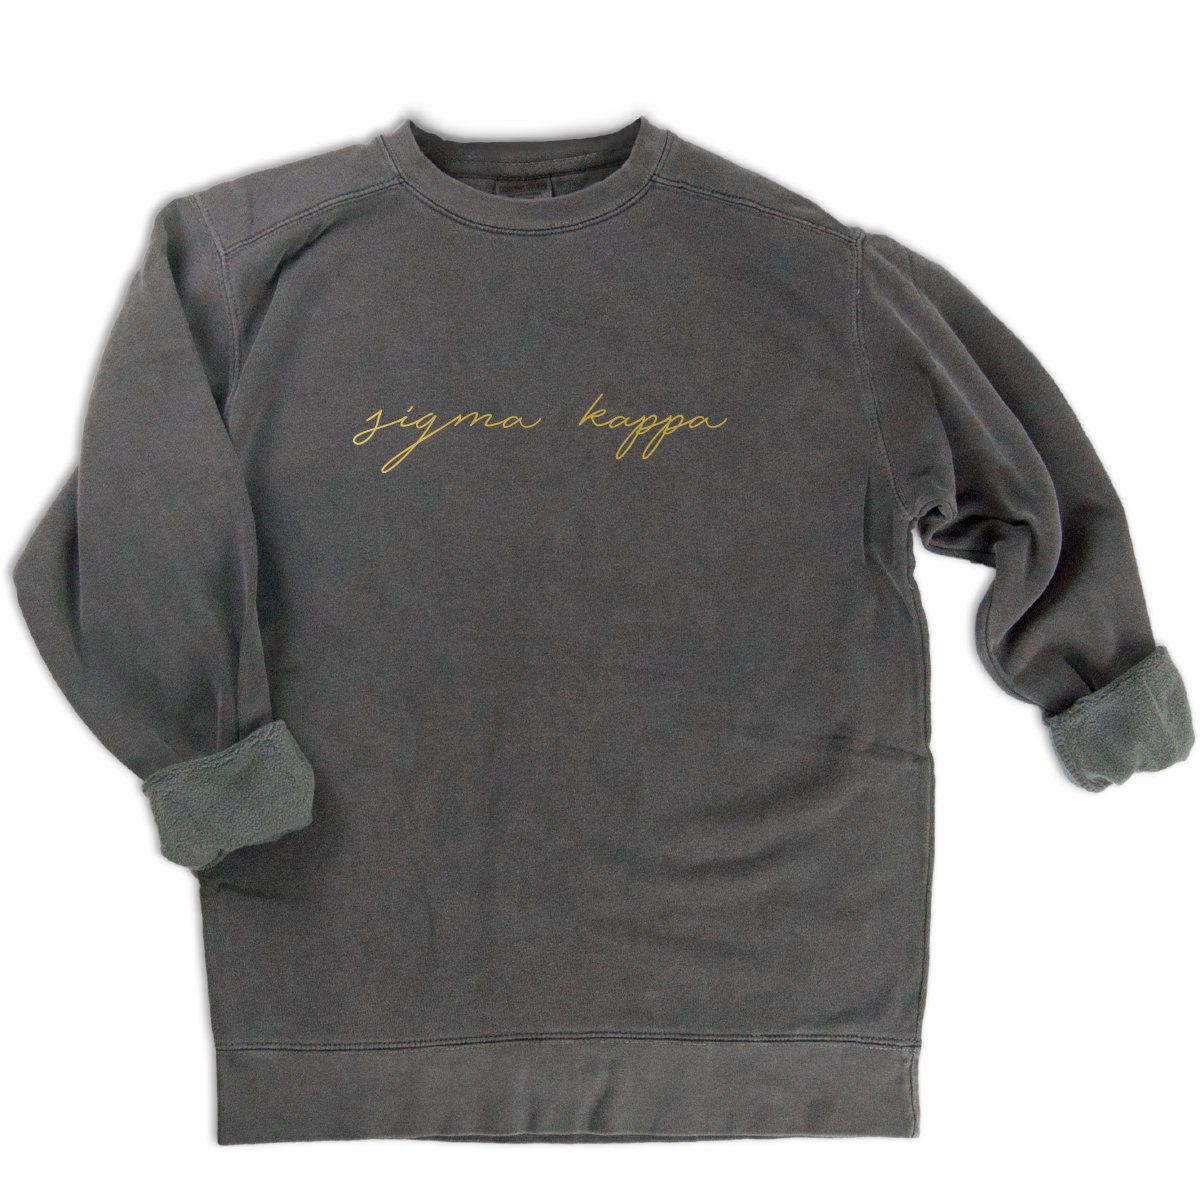 Sigma Kappa Gold Script Letters Sweatshirt - Go Greek Chic